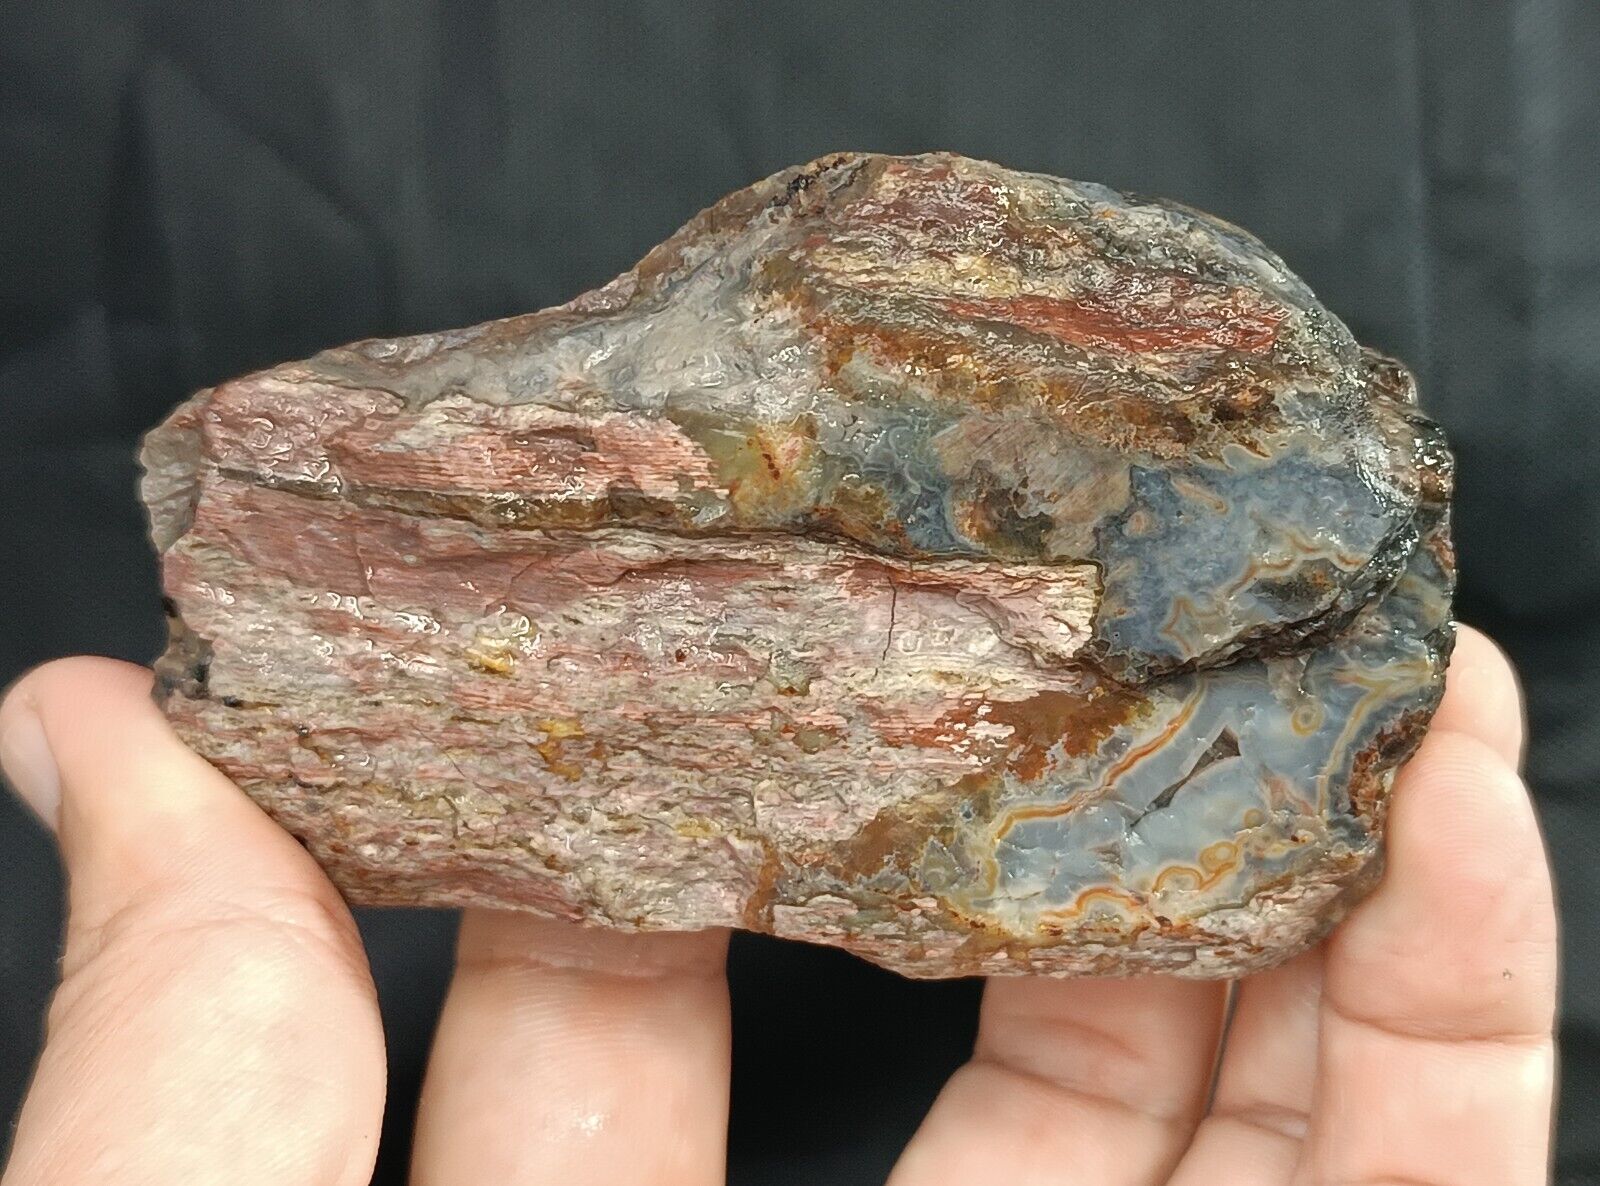 275g/0.61 lb uncut turkish agate stone rough,gemstone,rock,specimen